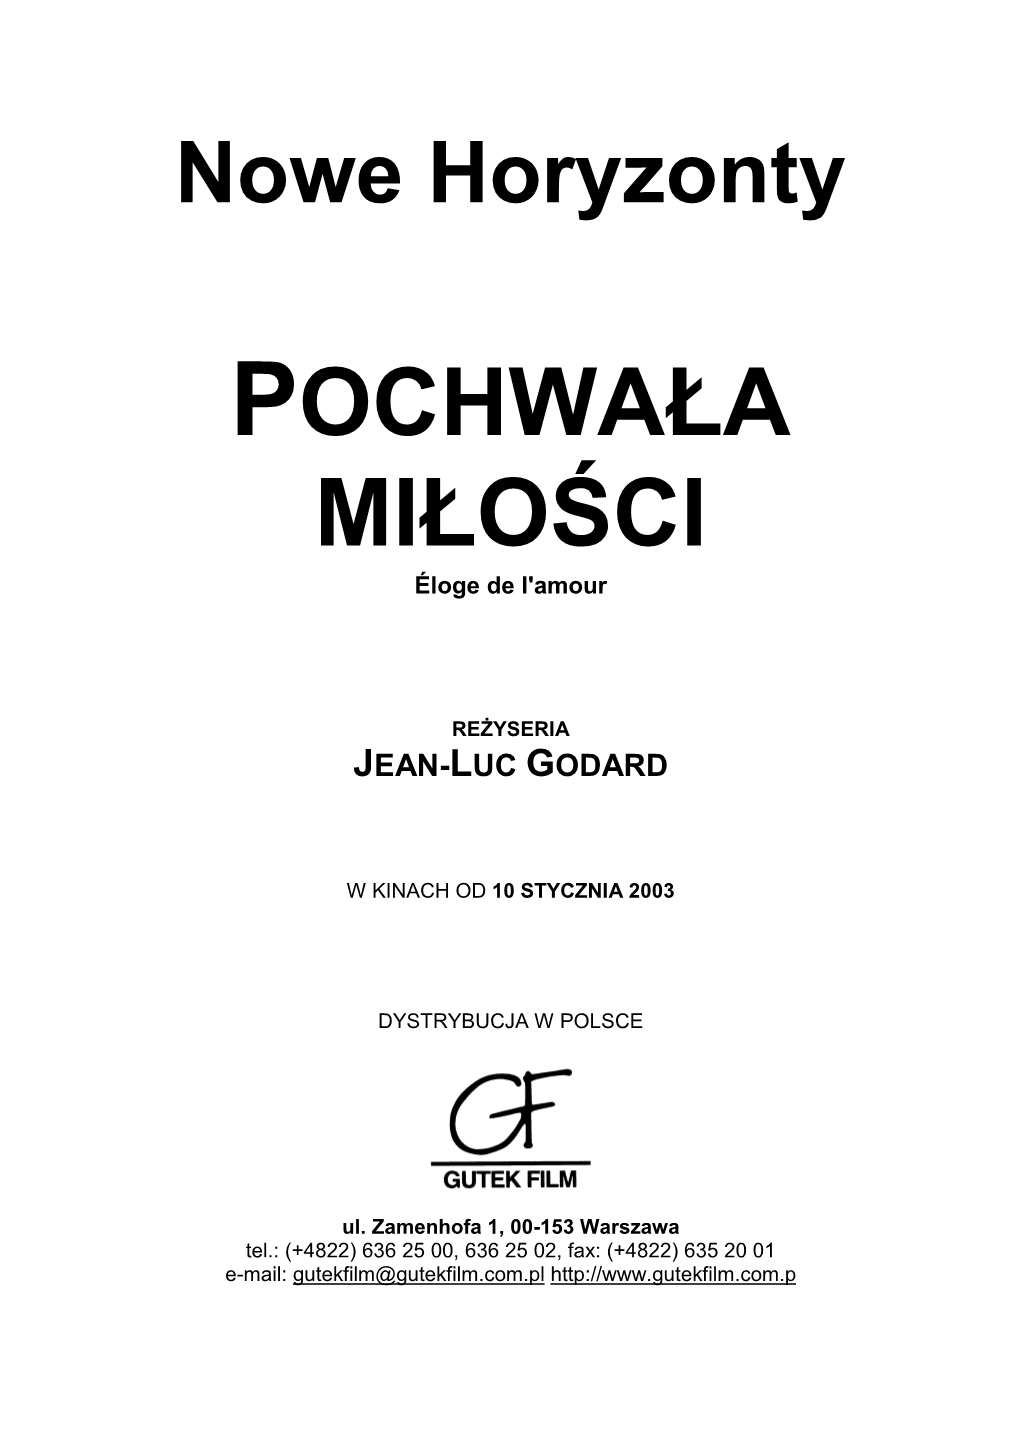 POCHWALA MILOSCI Pressbook